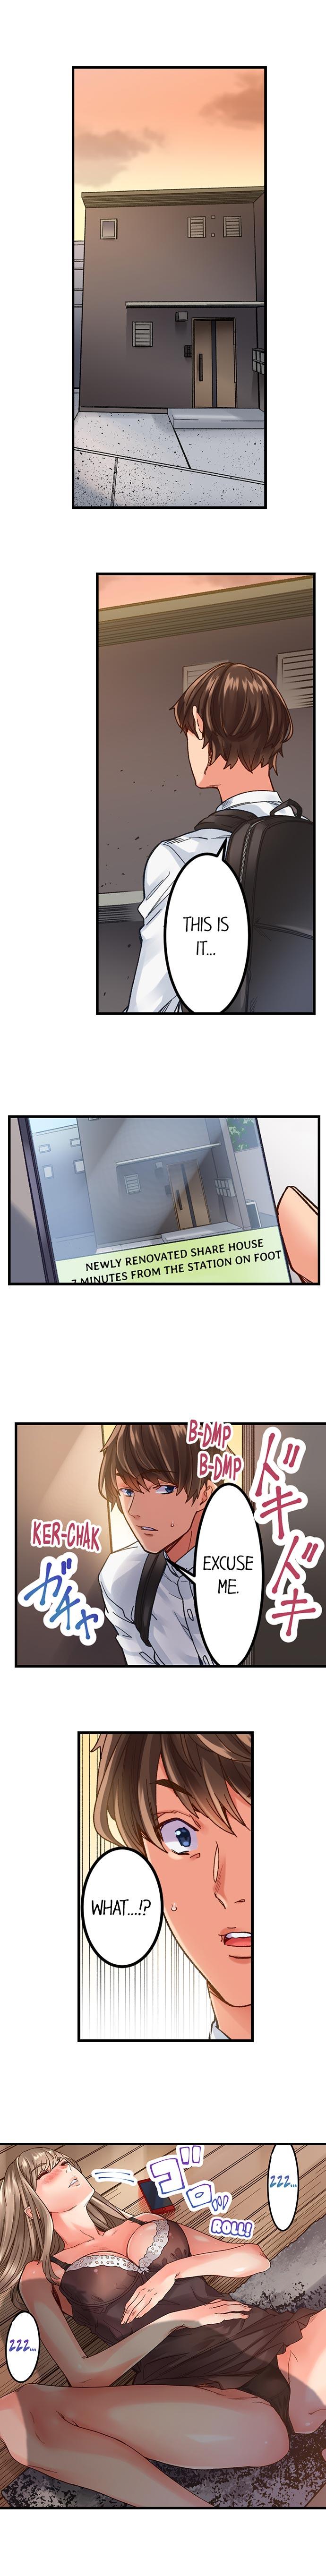 The Share House’s Secret Rule 3